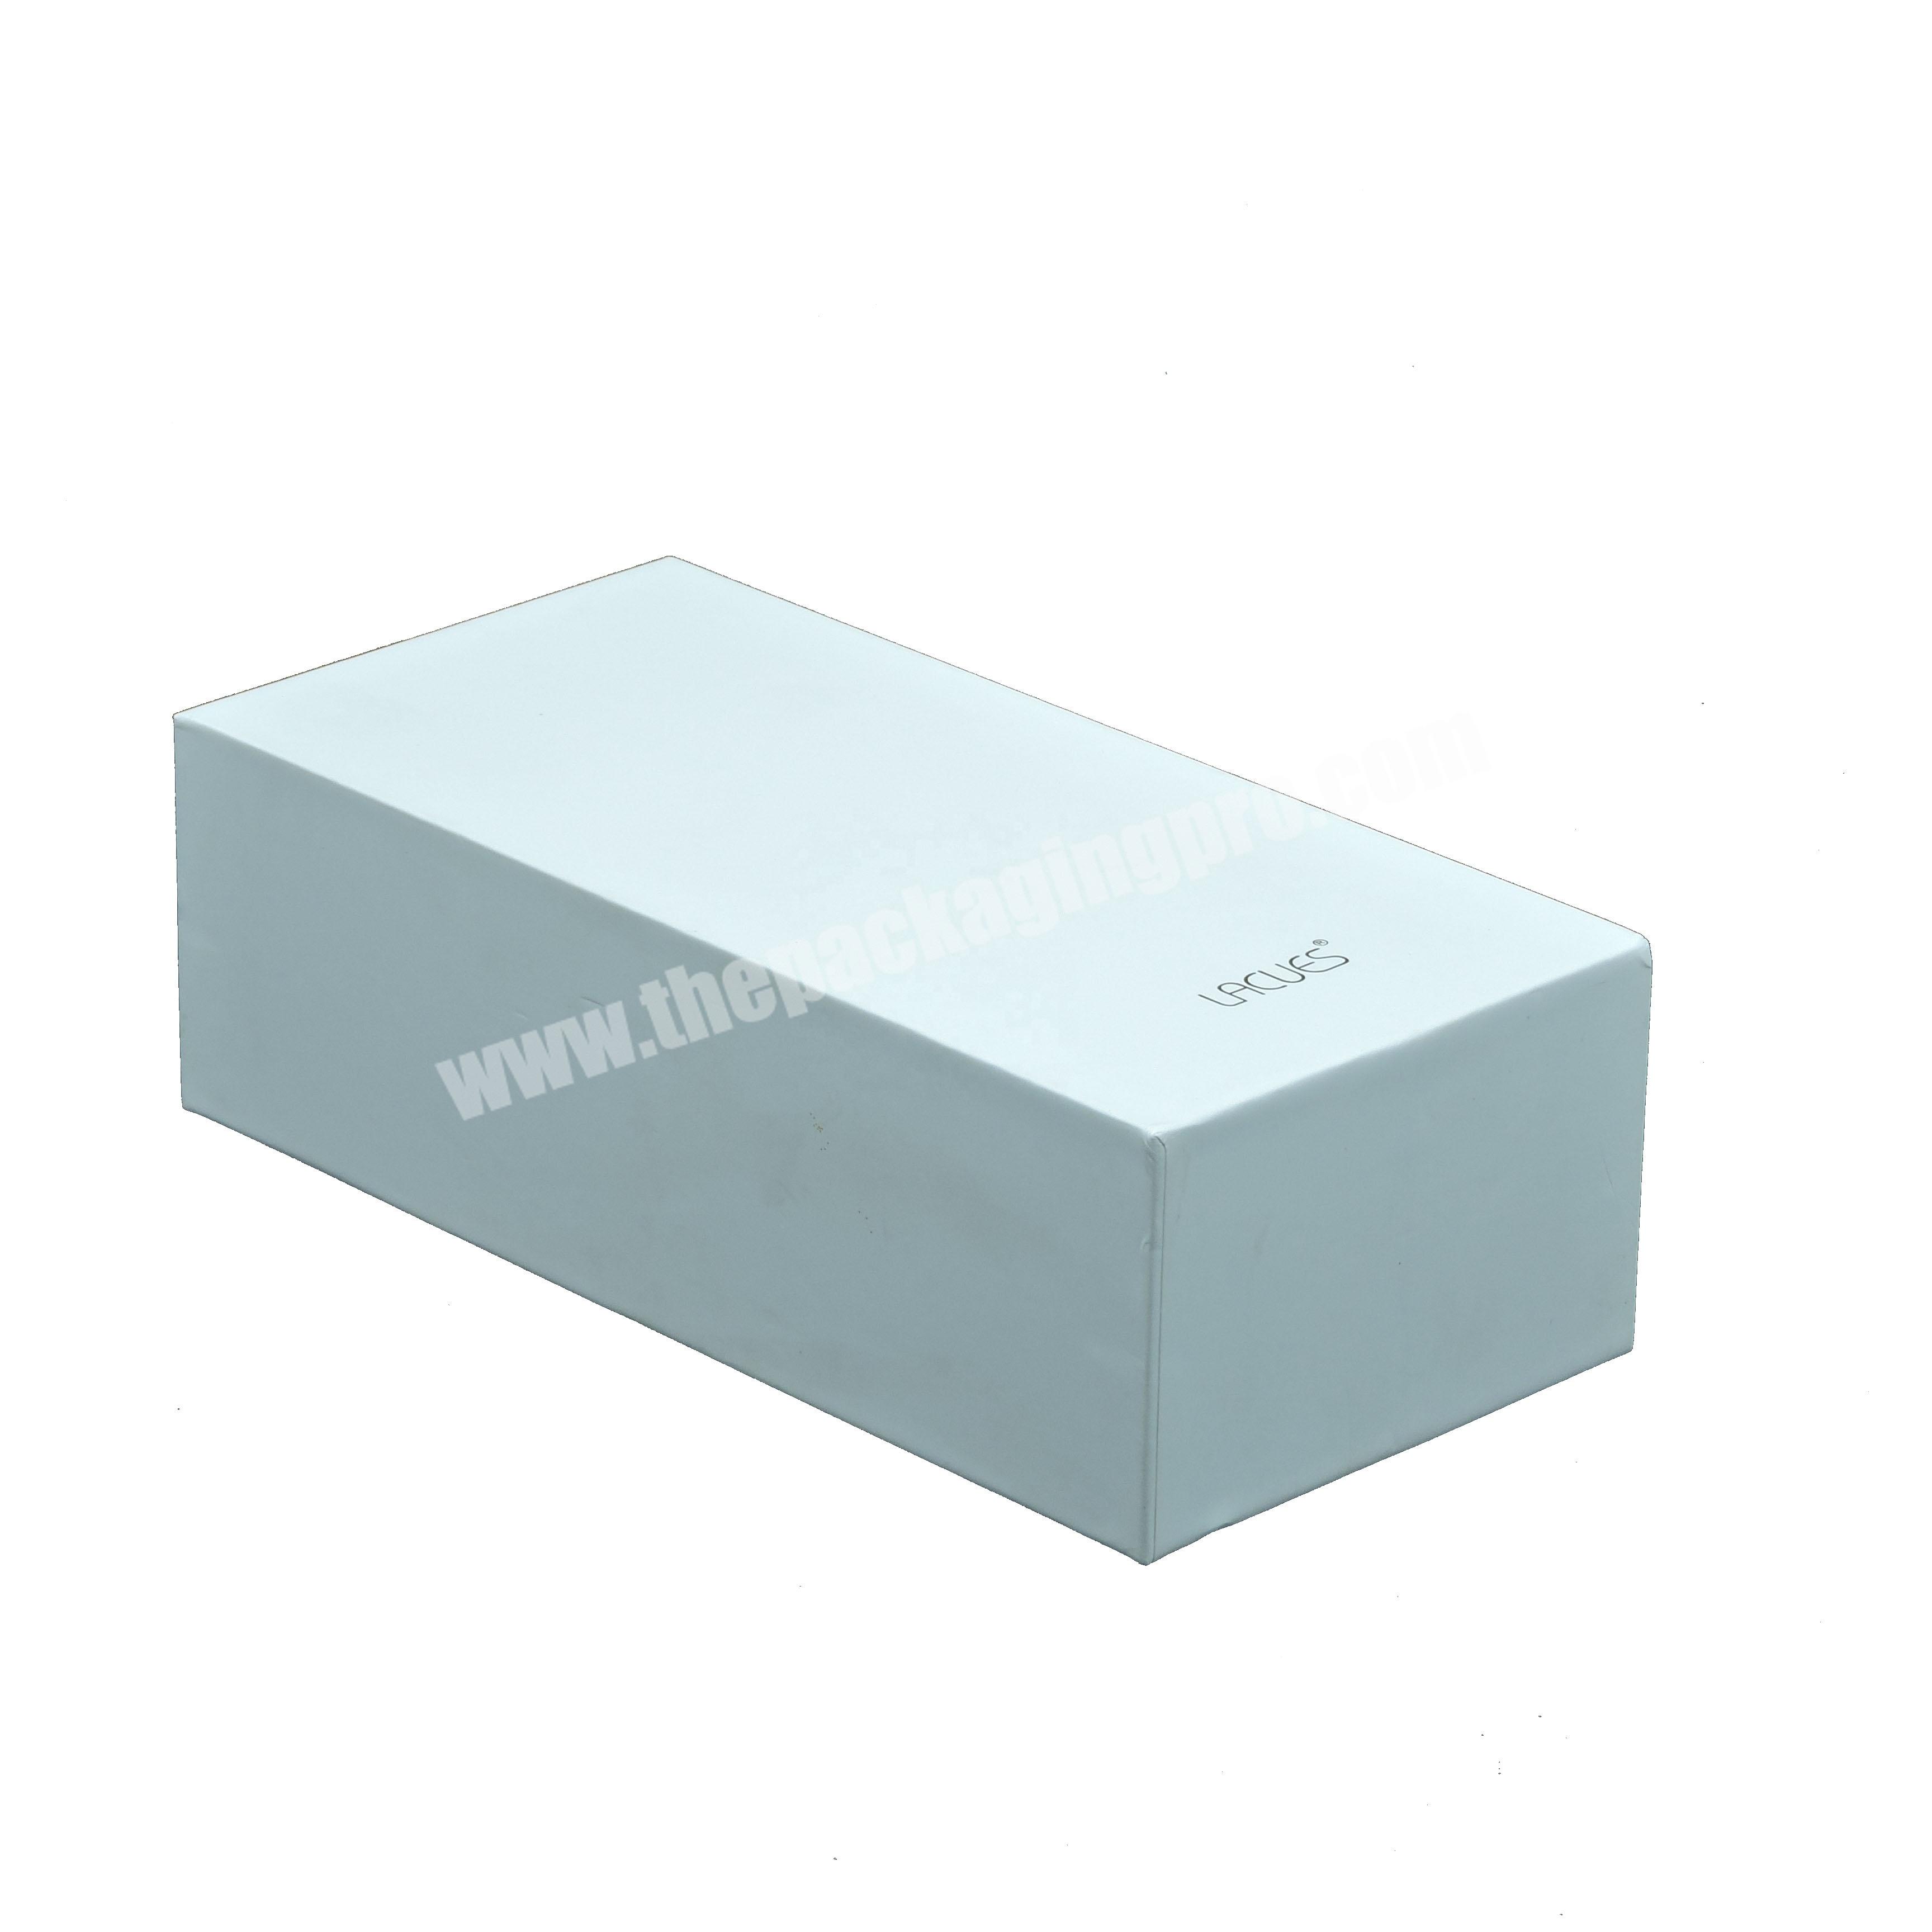 Luxury custom facial massager packaging box jade roller packing box gift box for face roller